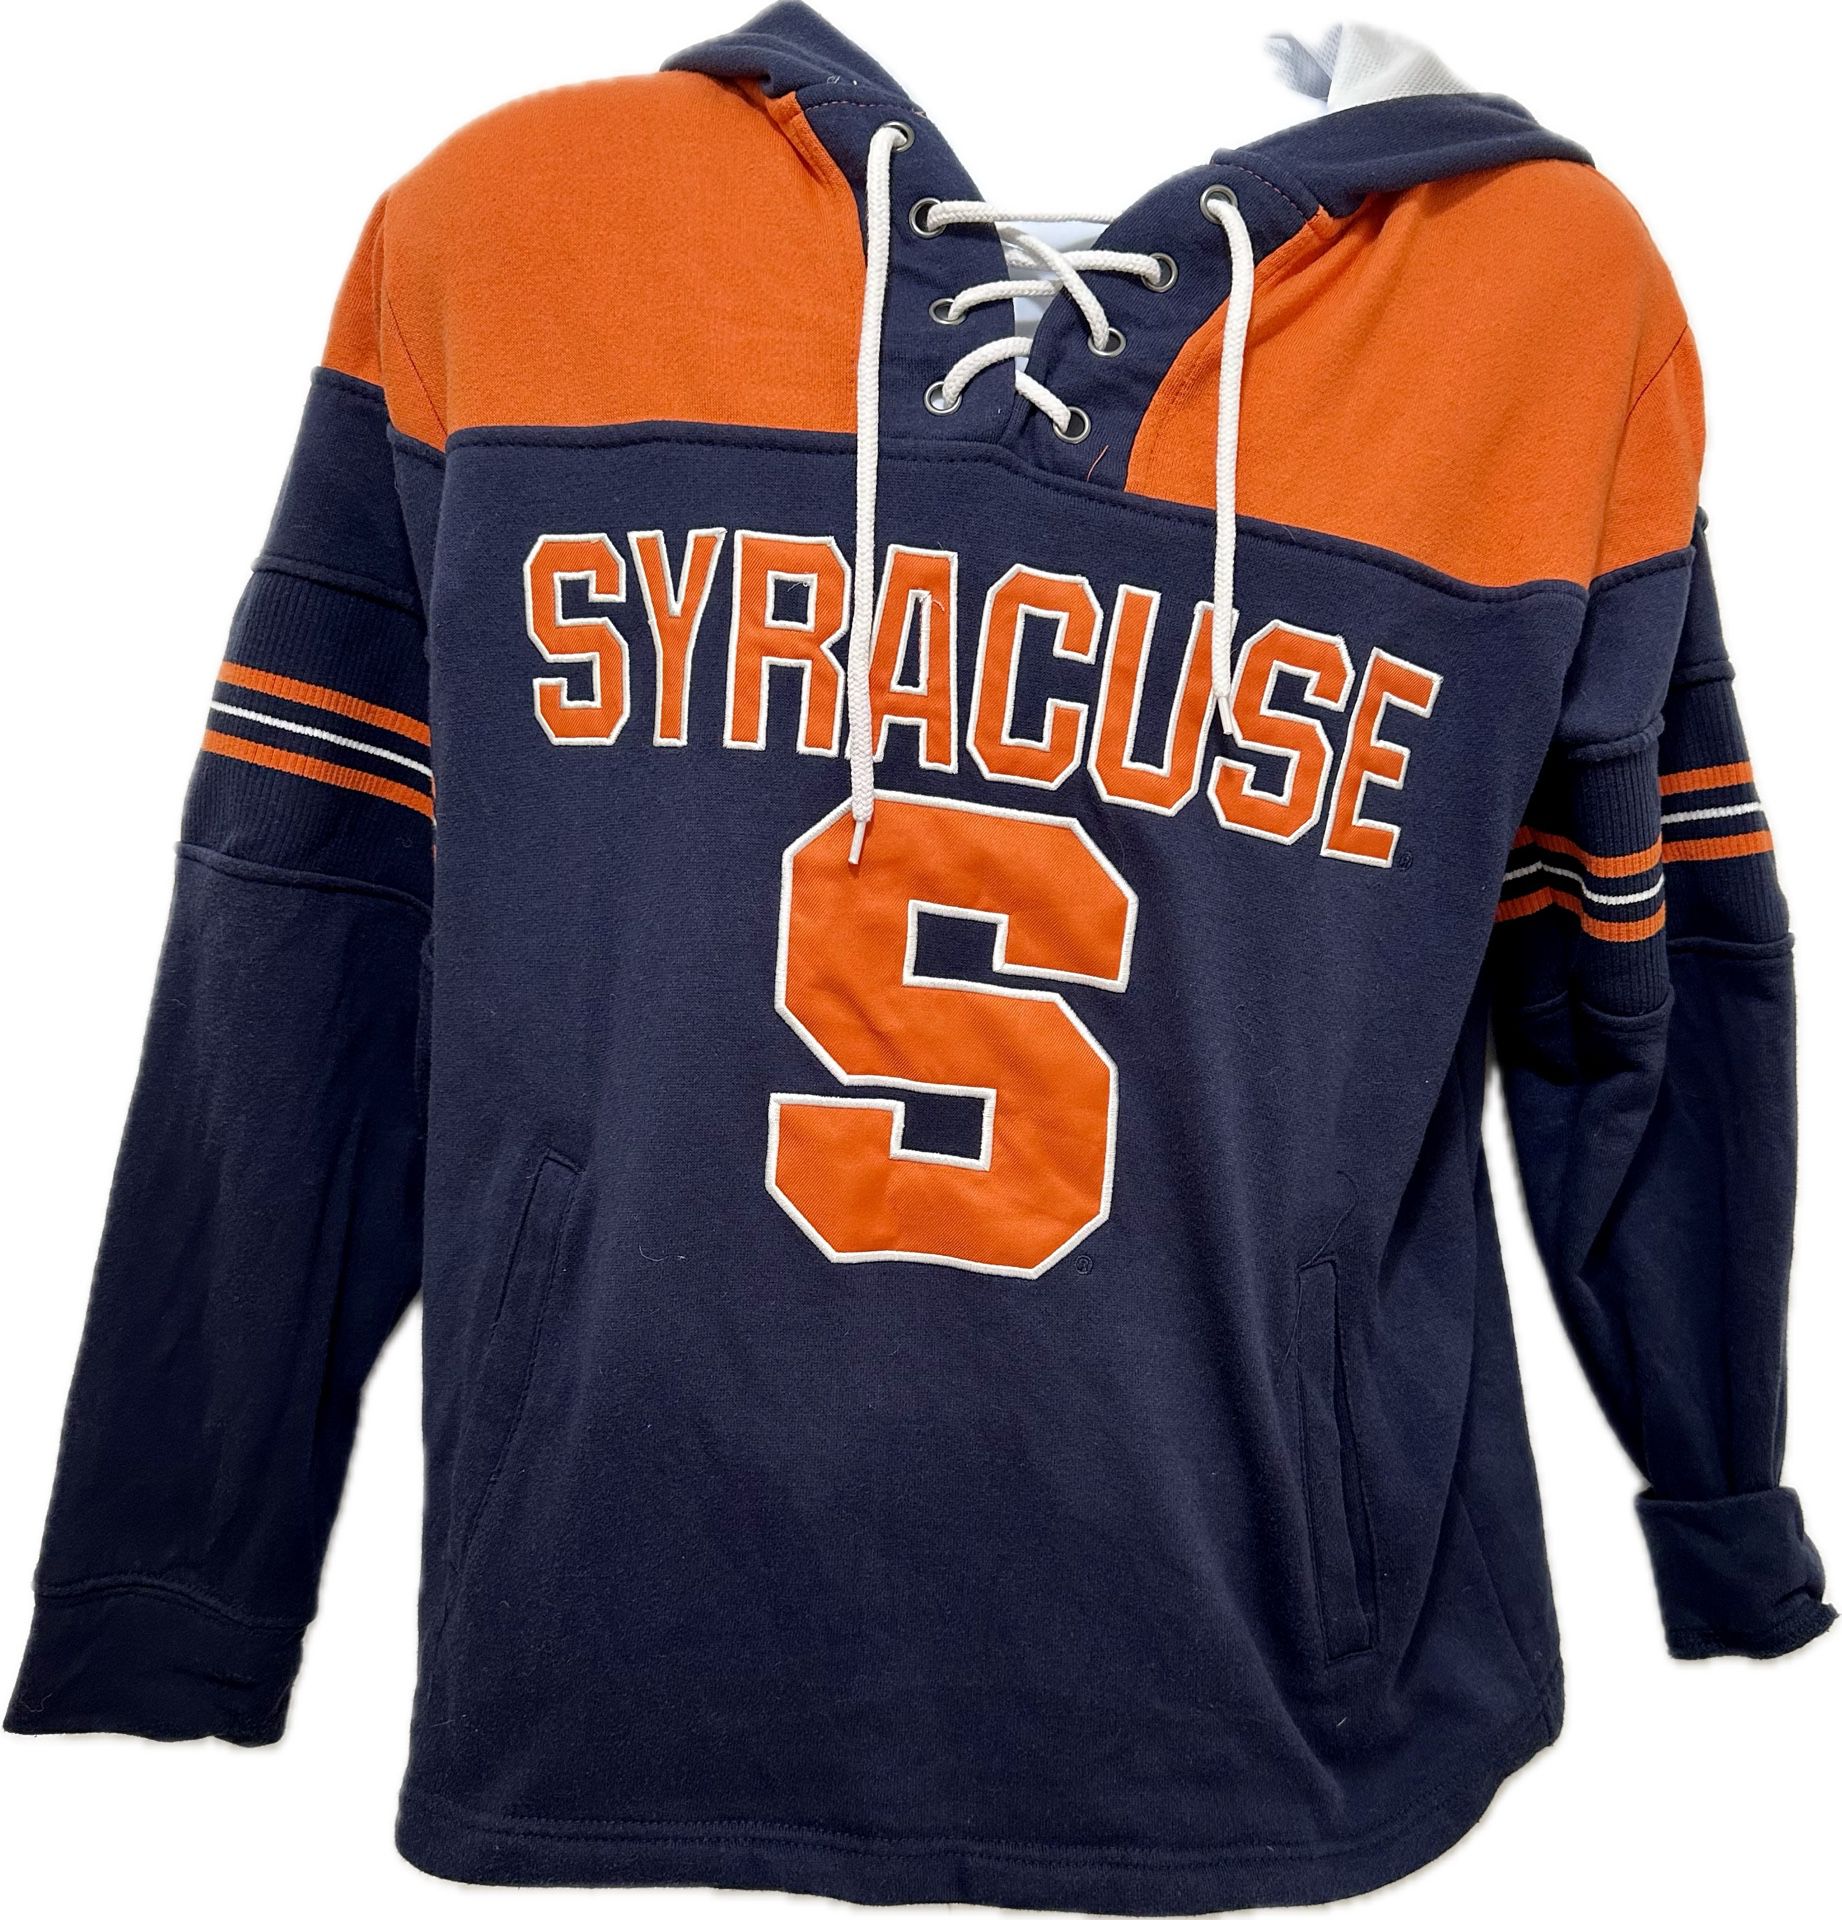 Syracuse University Colosseum Brand Sweatshirt Size Small 